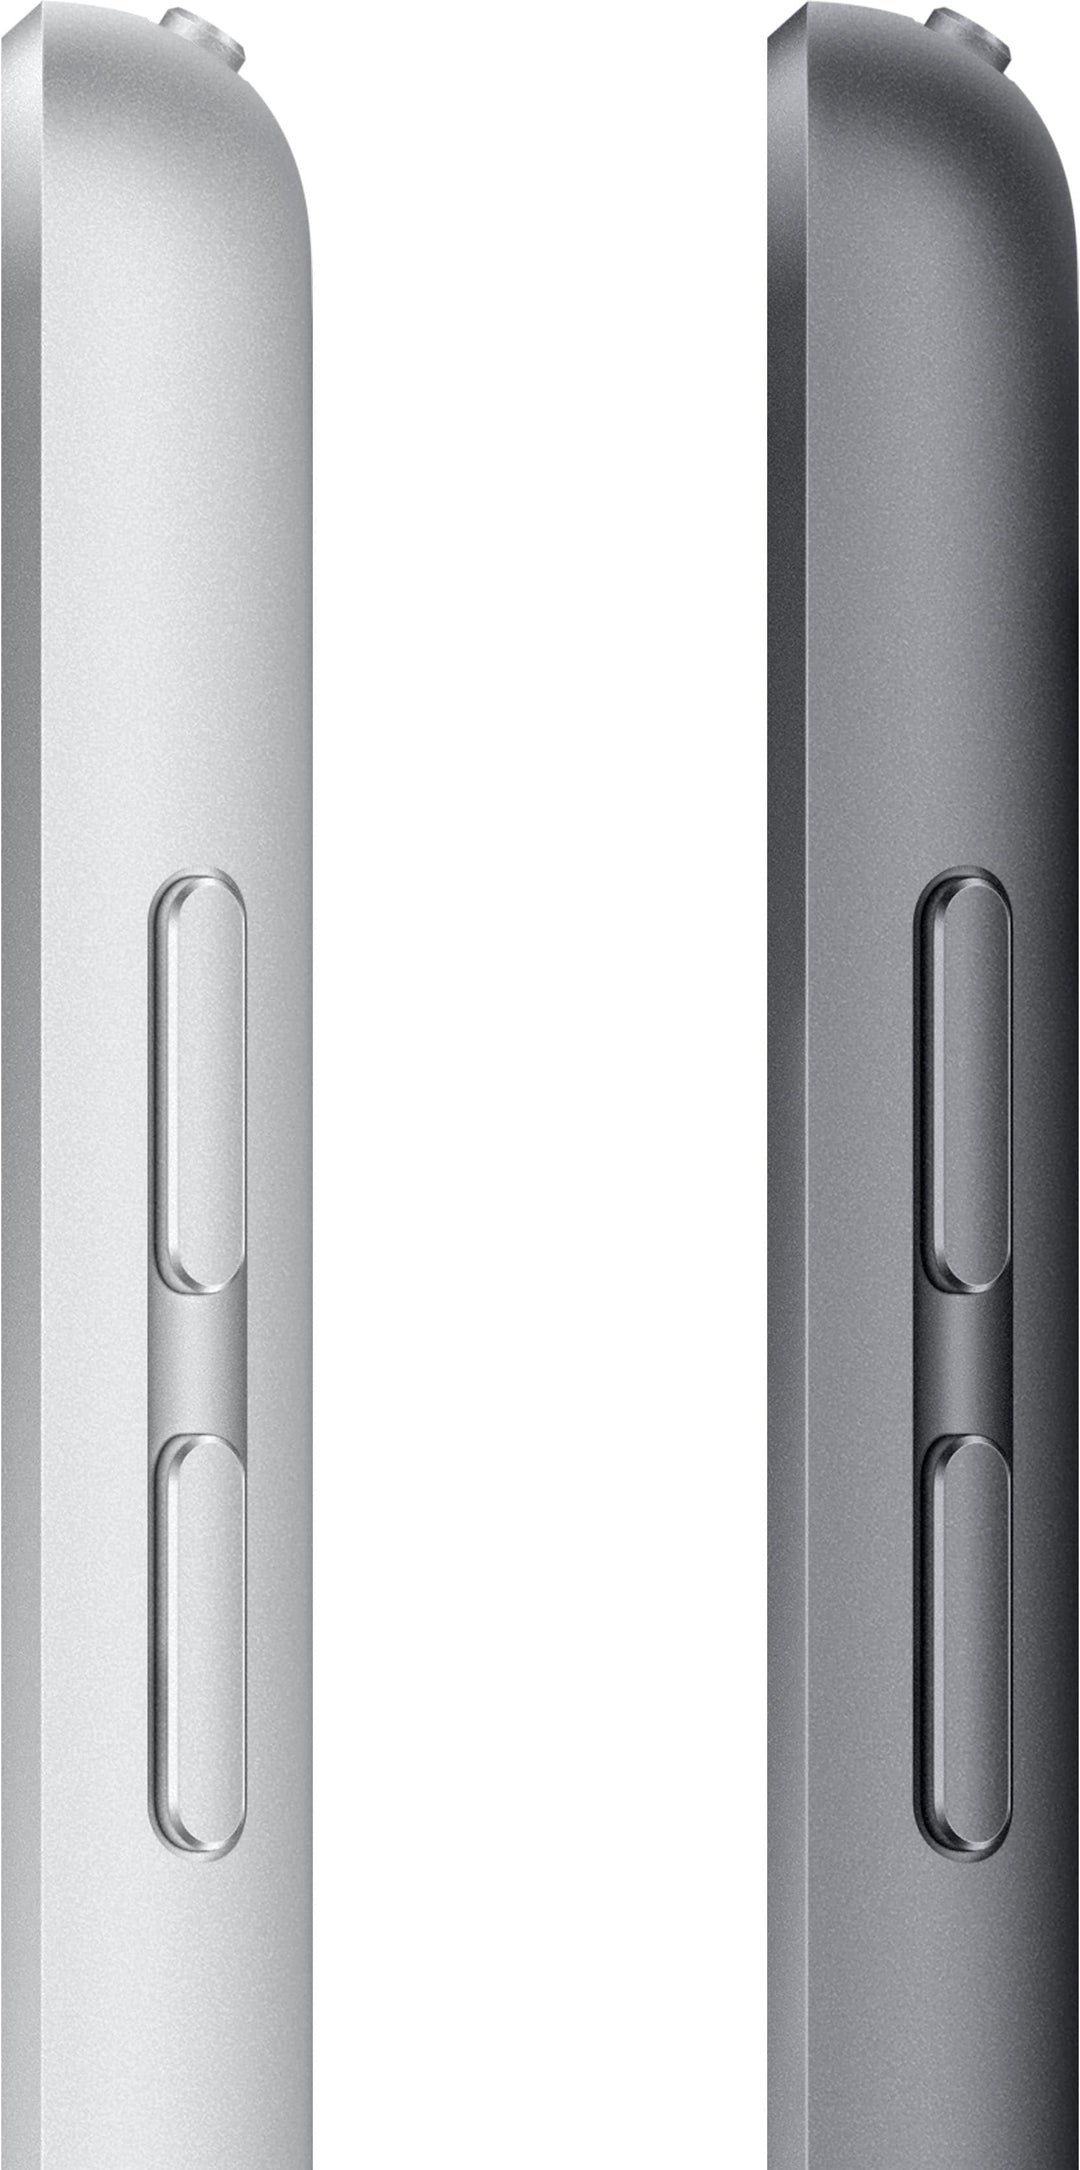 Apple - 10.2-Inch iPad (Latest Model) with Wi-Fi - 64GB - Silver_3